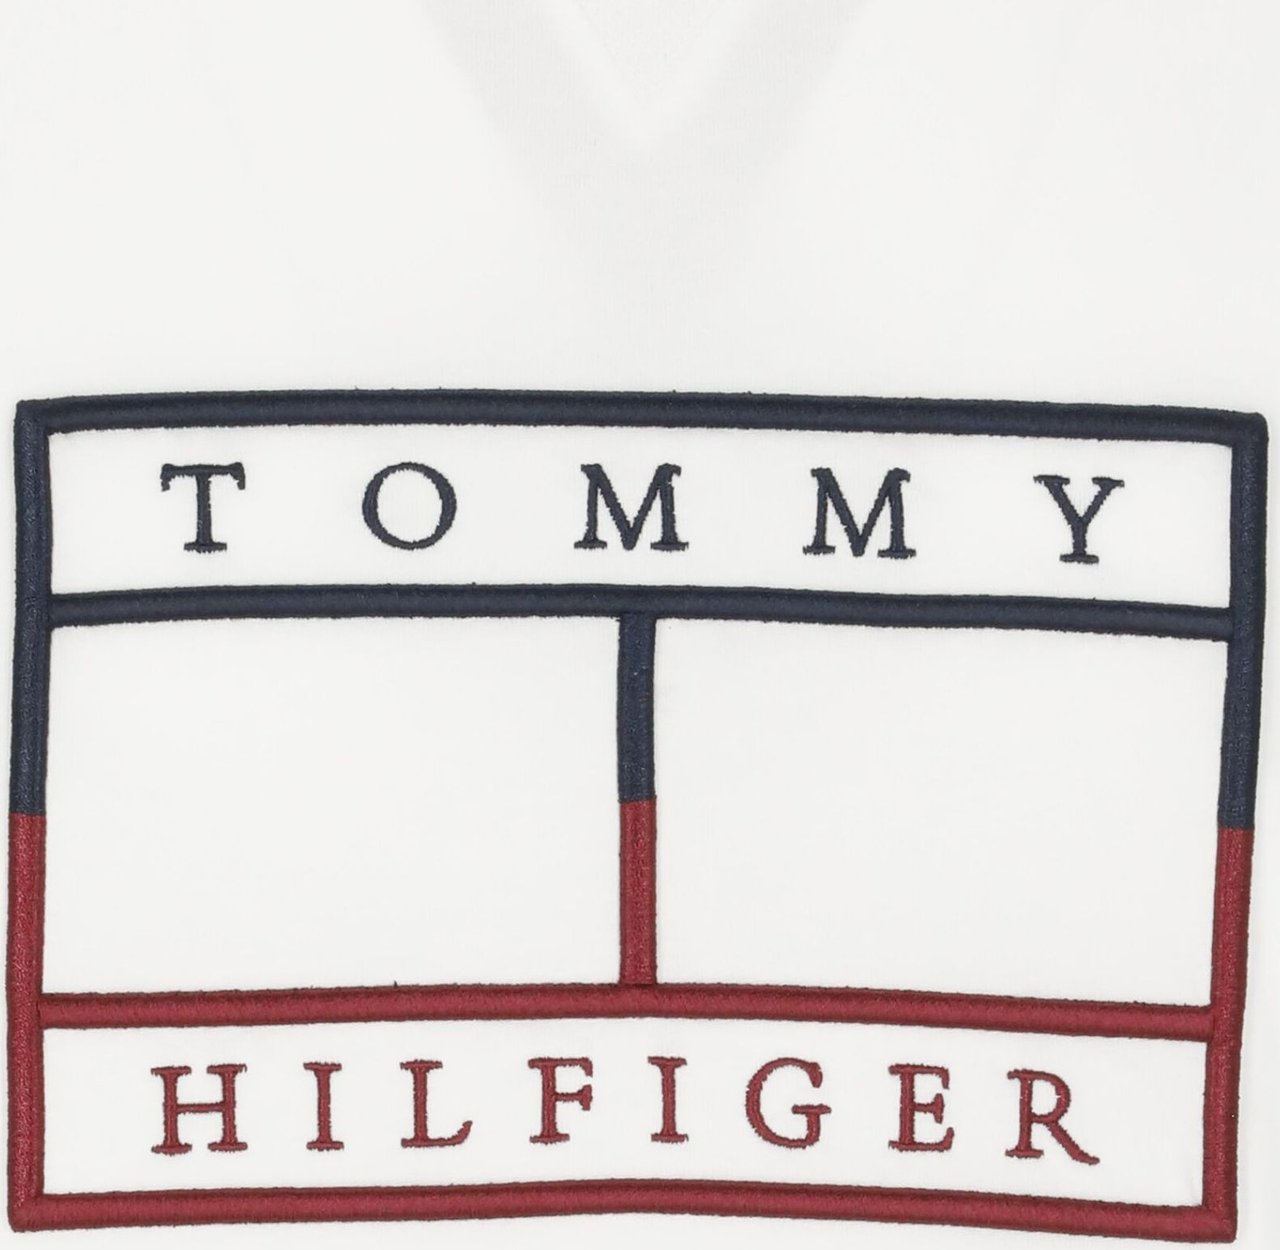 Tommy Hilfiger T-Shirt Wit Wit